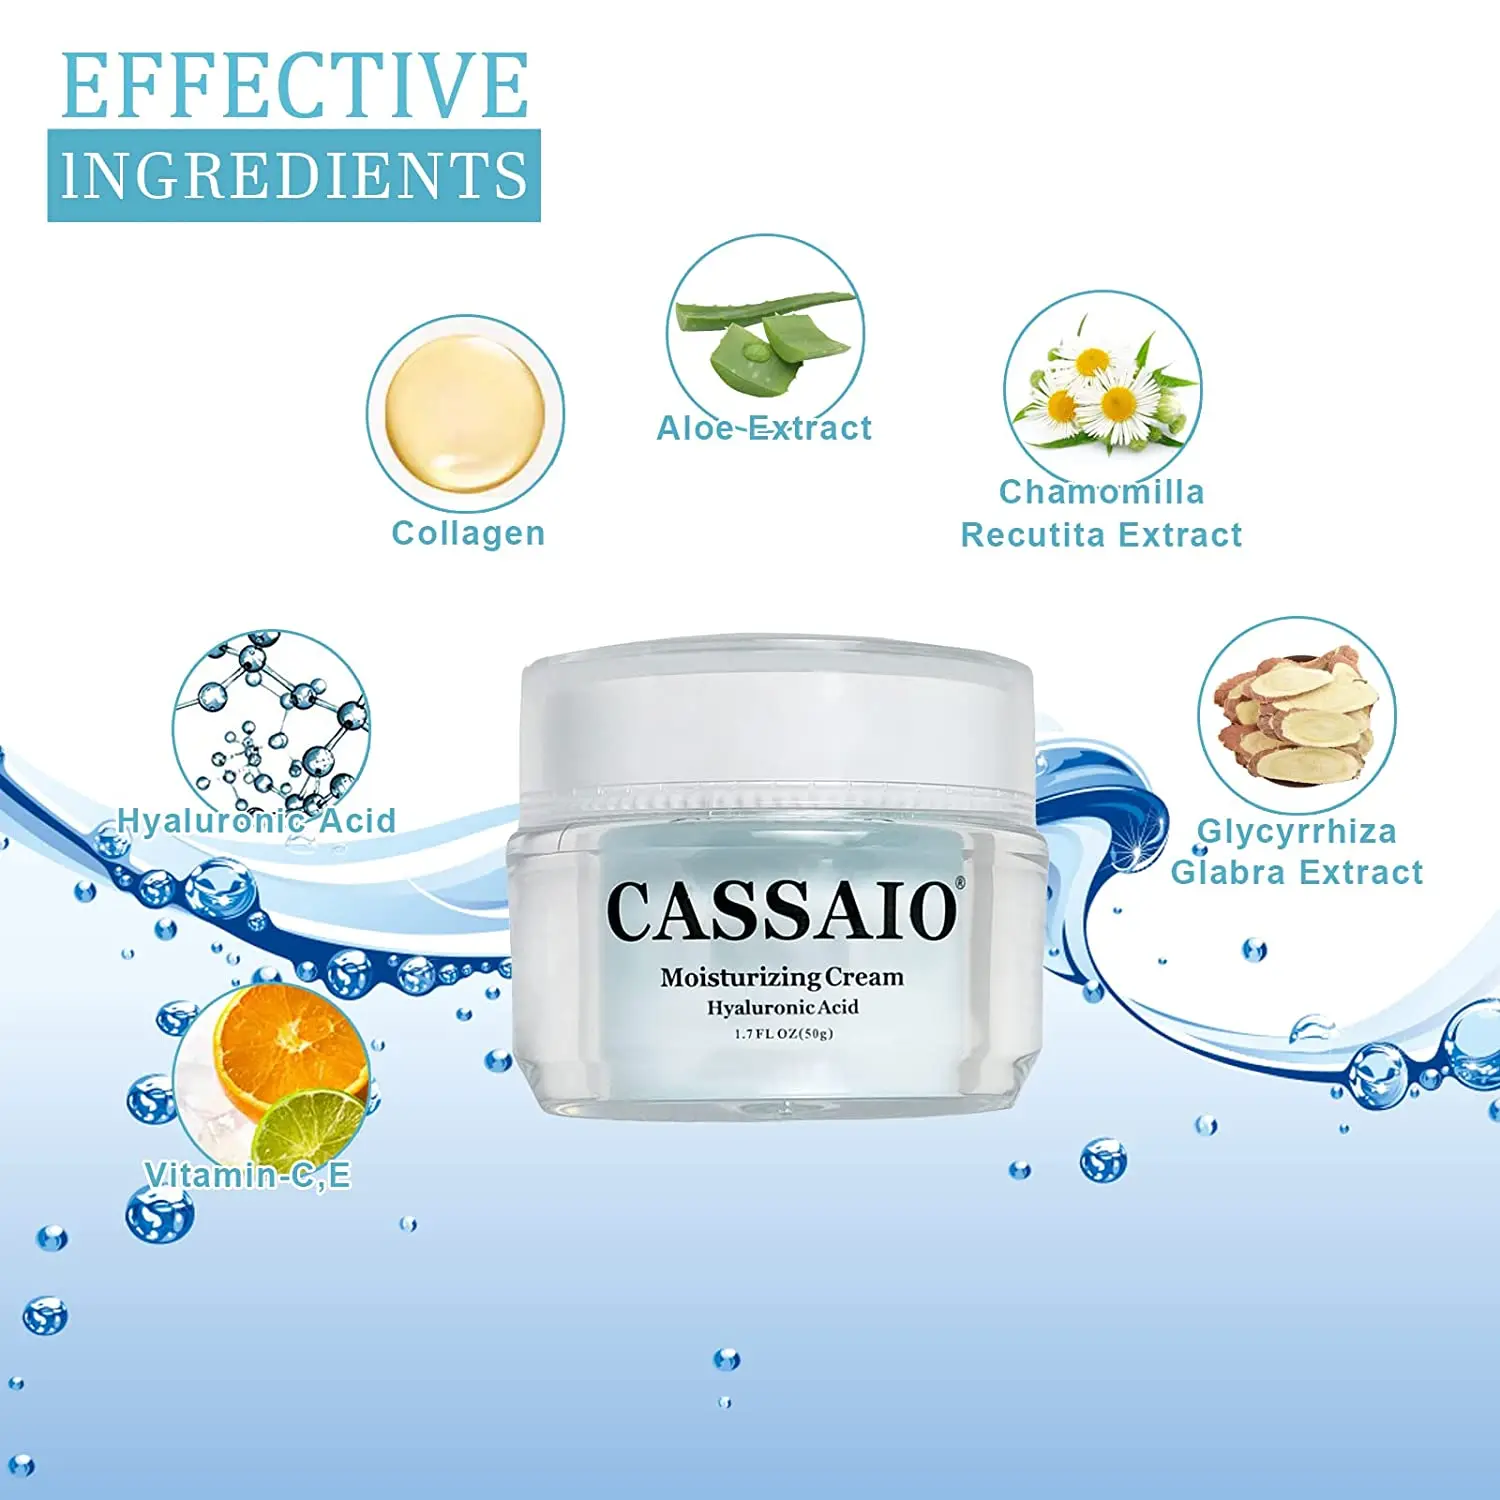 

Moisturizing Face Cream Hyaluronic Acid Daily Facial Moisturizer 1.7 Fl OZ Whitening Sensitive Dark Facial Products